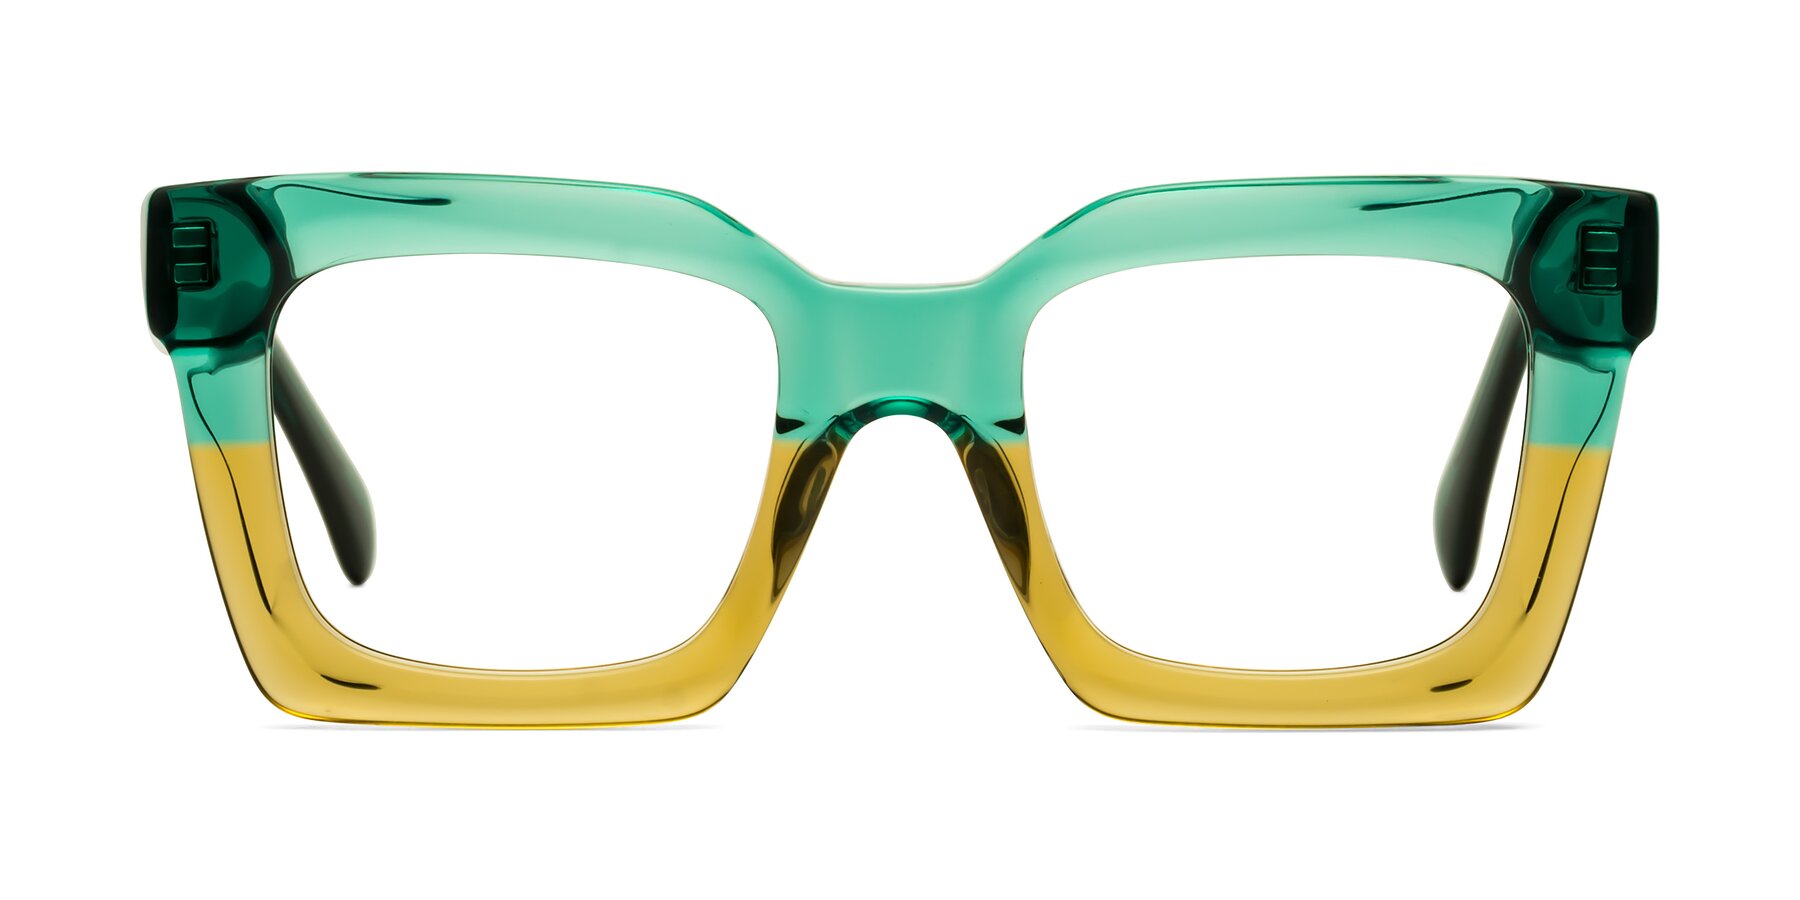 Piper - Green / Champagne Sunglasses Frame